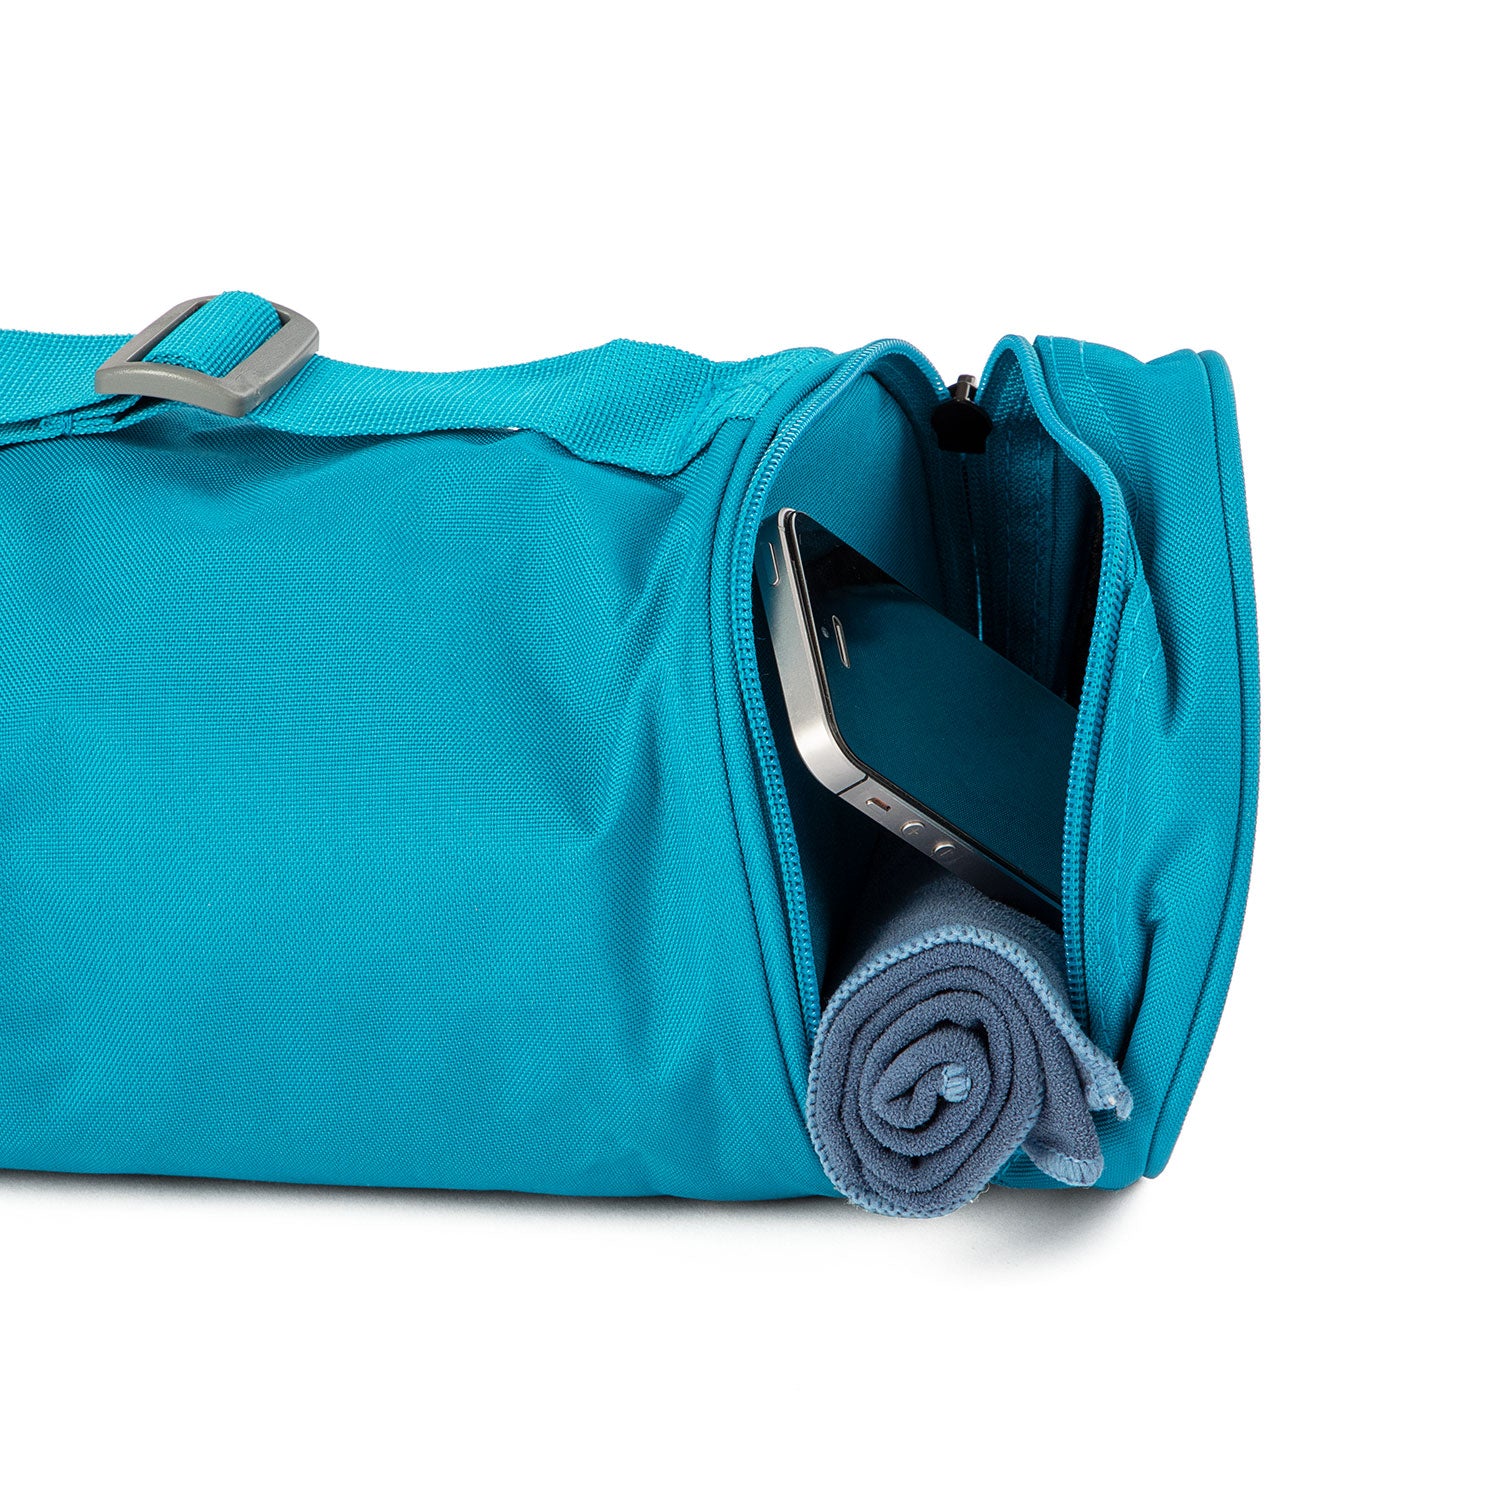 Maqueta de bolsa para esterilla de yoga, vista izquierda